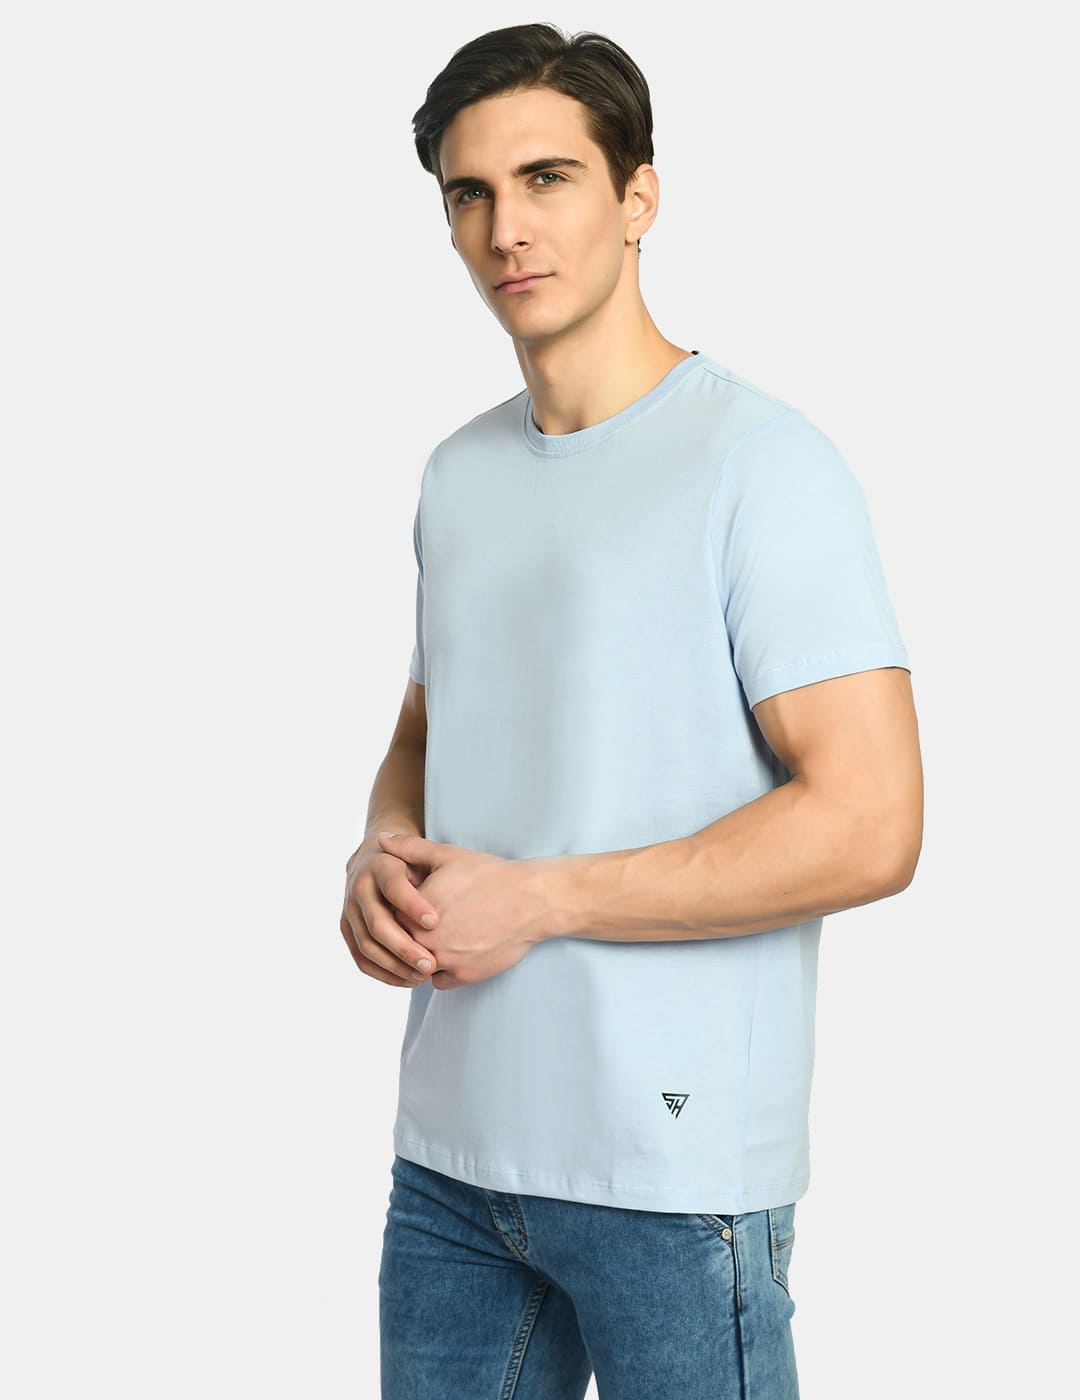 Men's Plain Baby Blue Round Neck T-Shirt